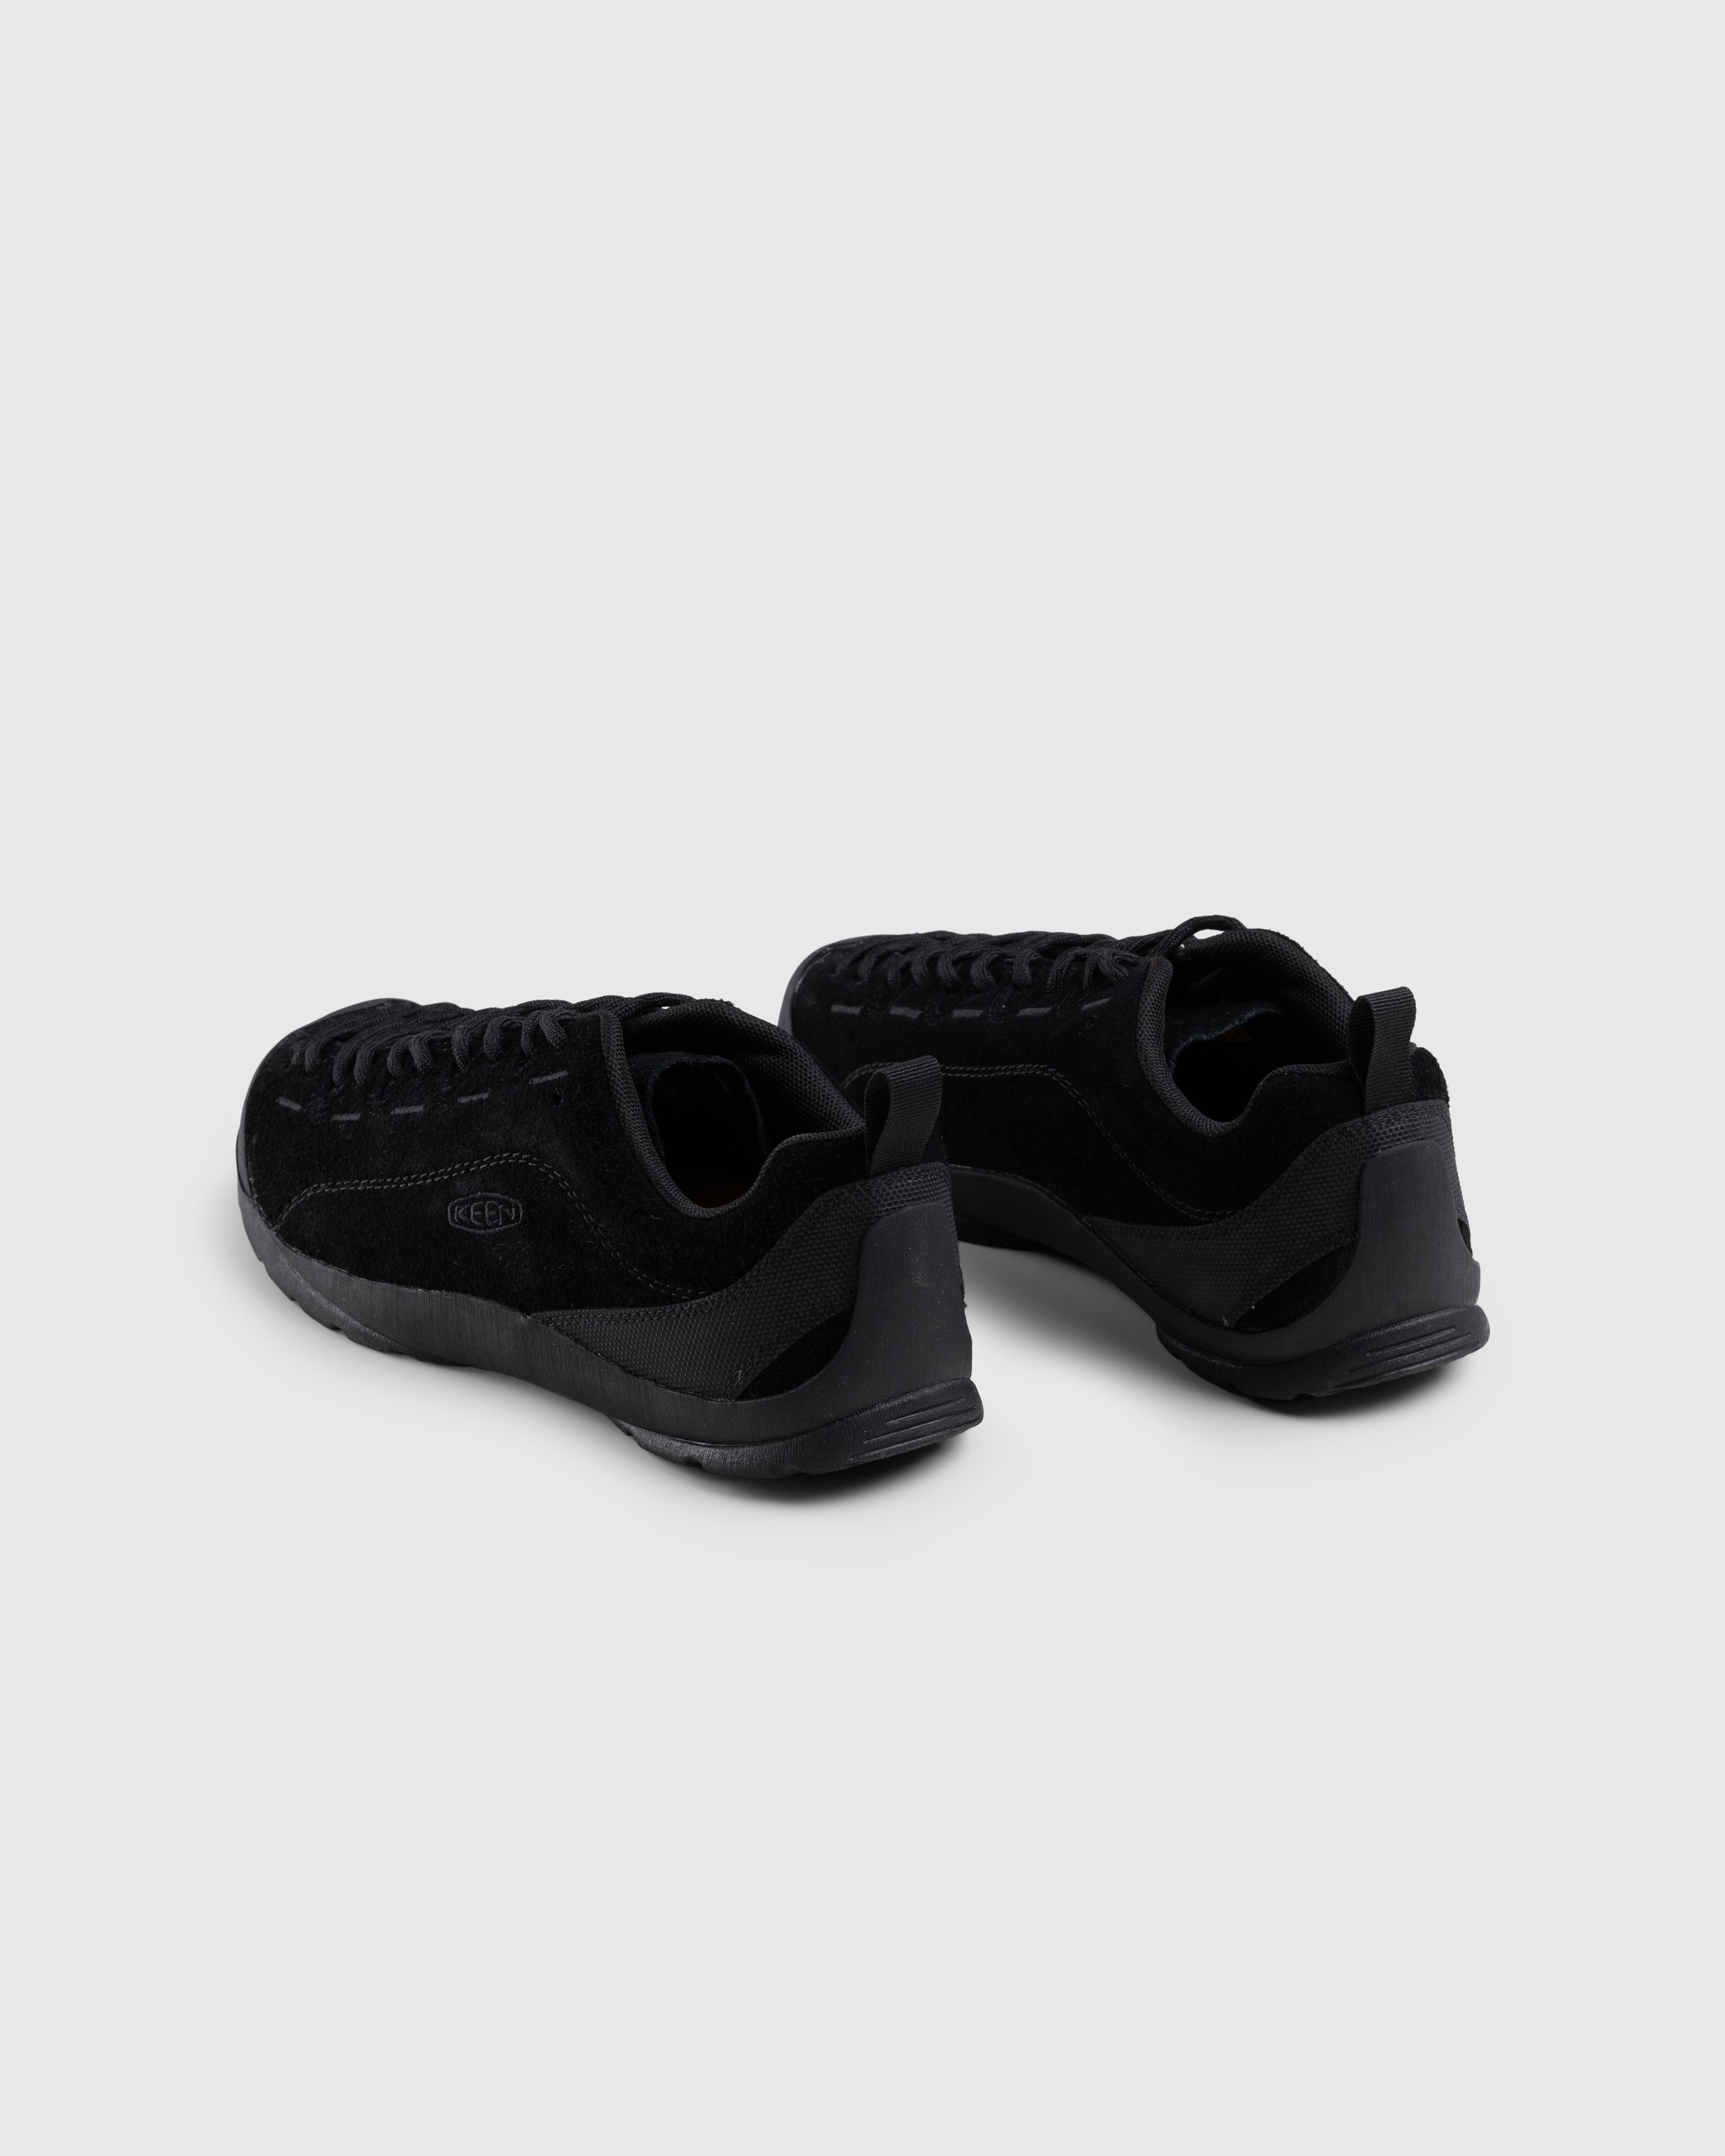 Keen - JASPER Black - Footwear - Black - Image 4